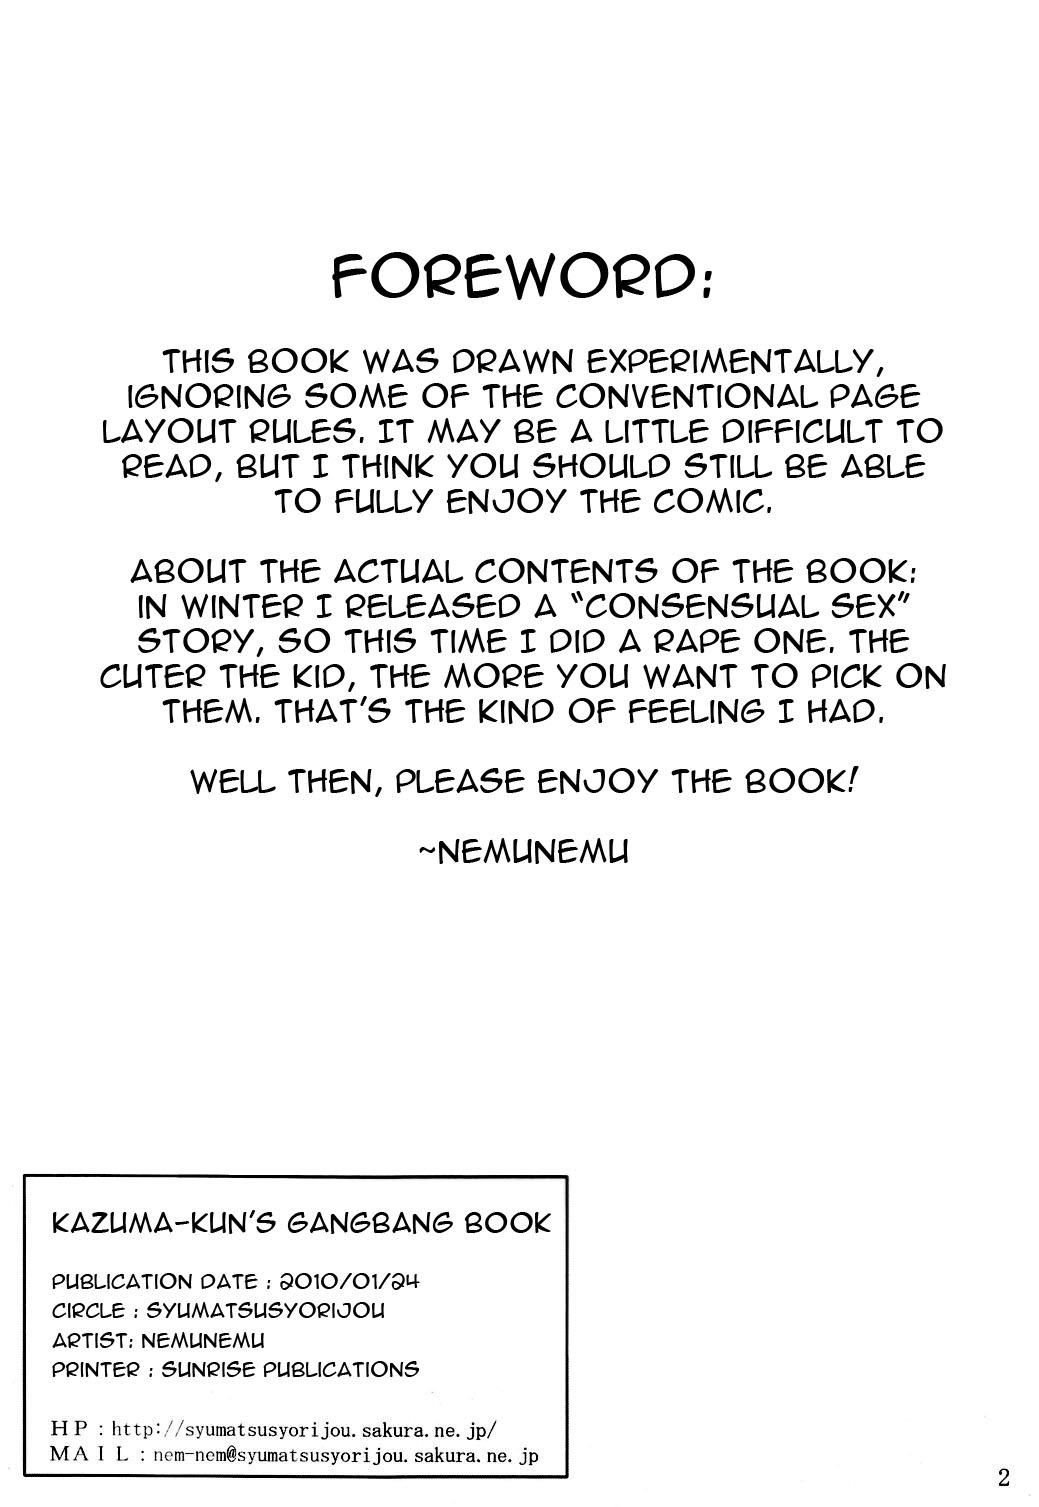 Kazumakun's Gangbang Book 2